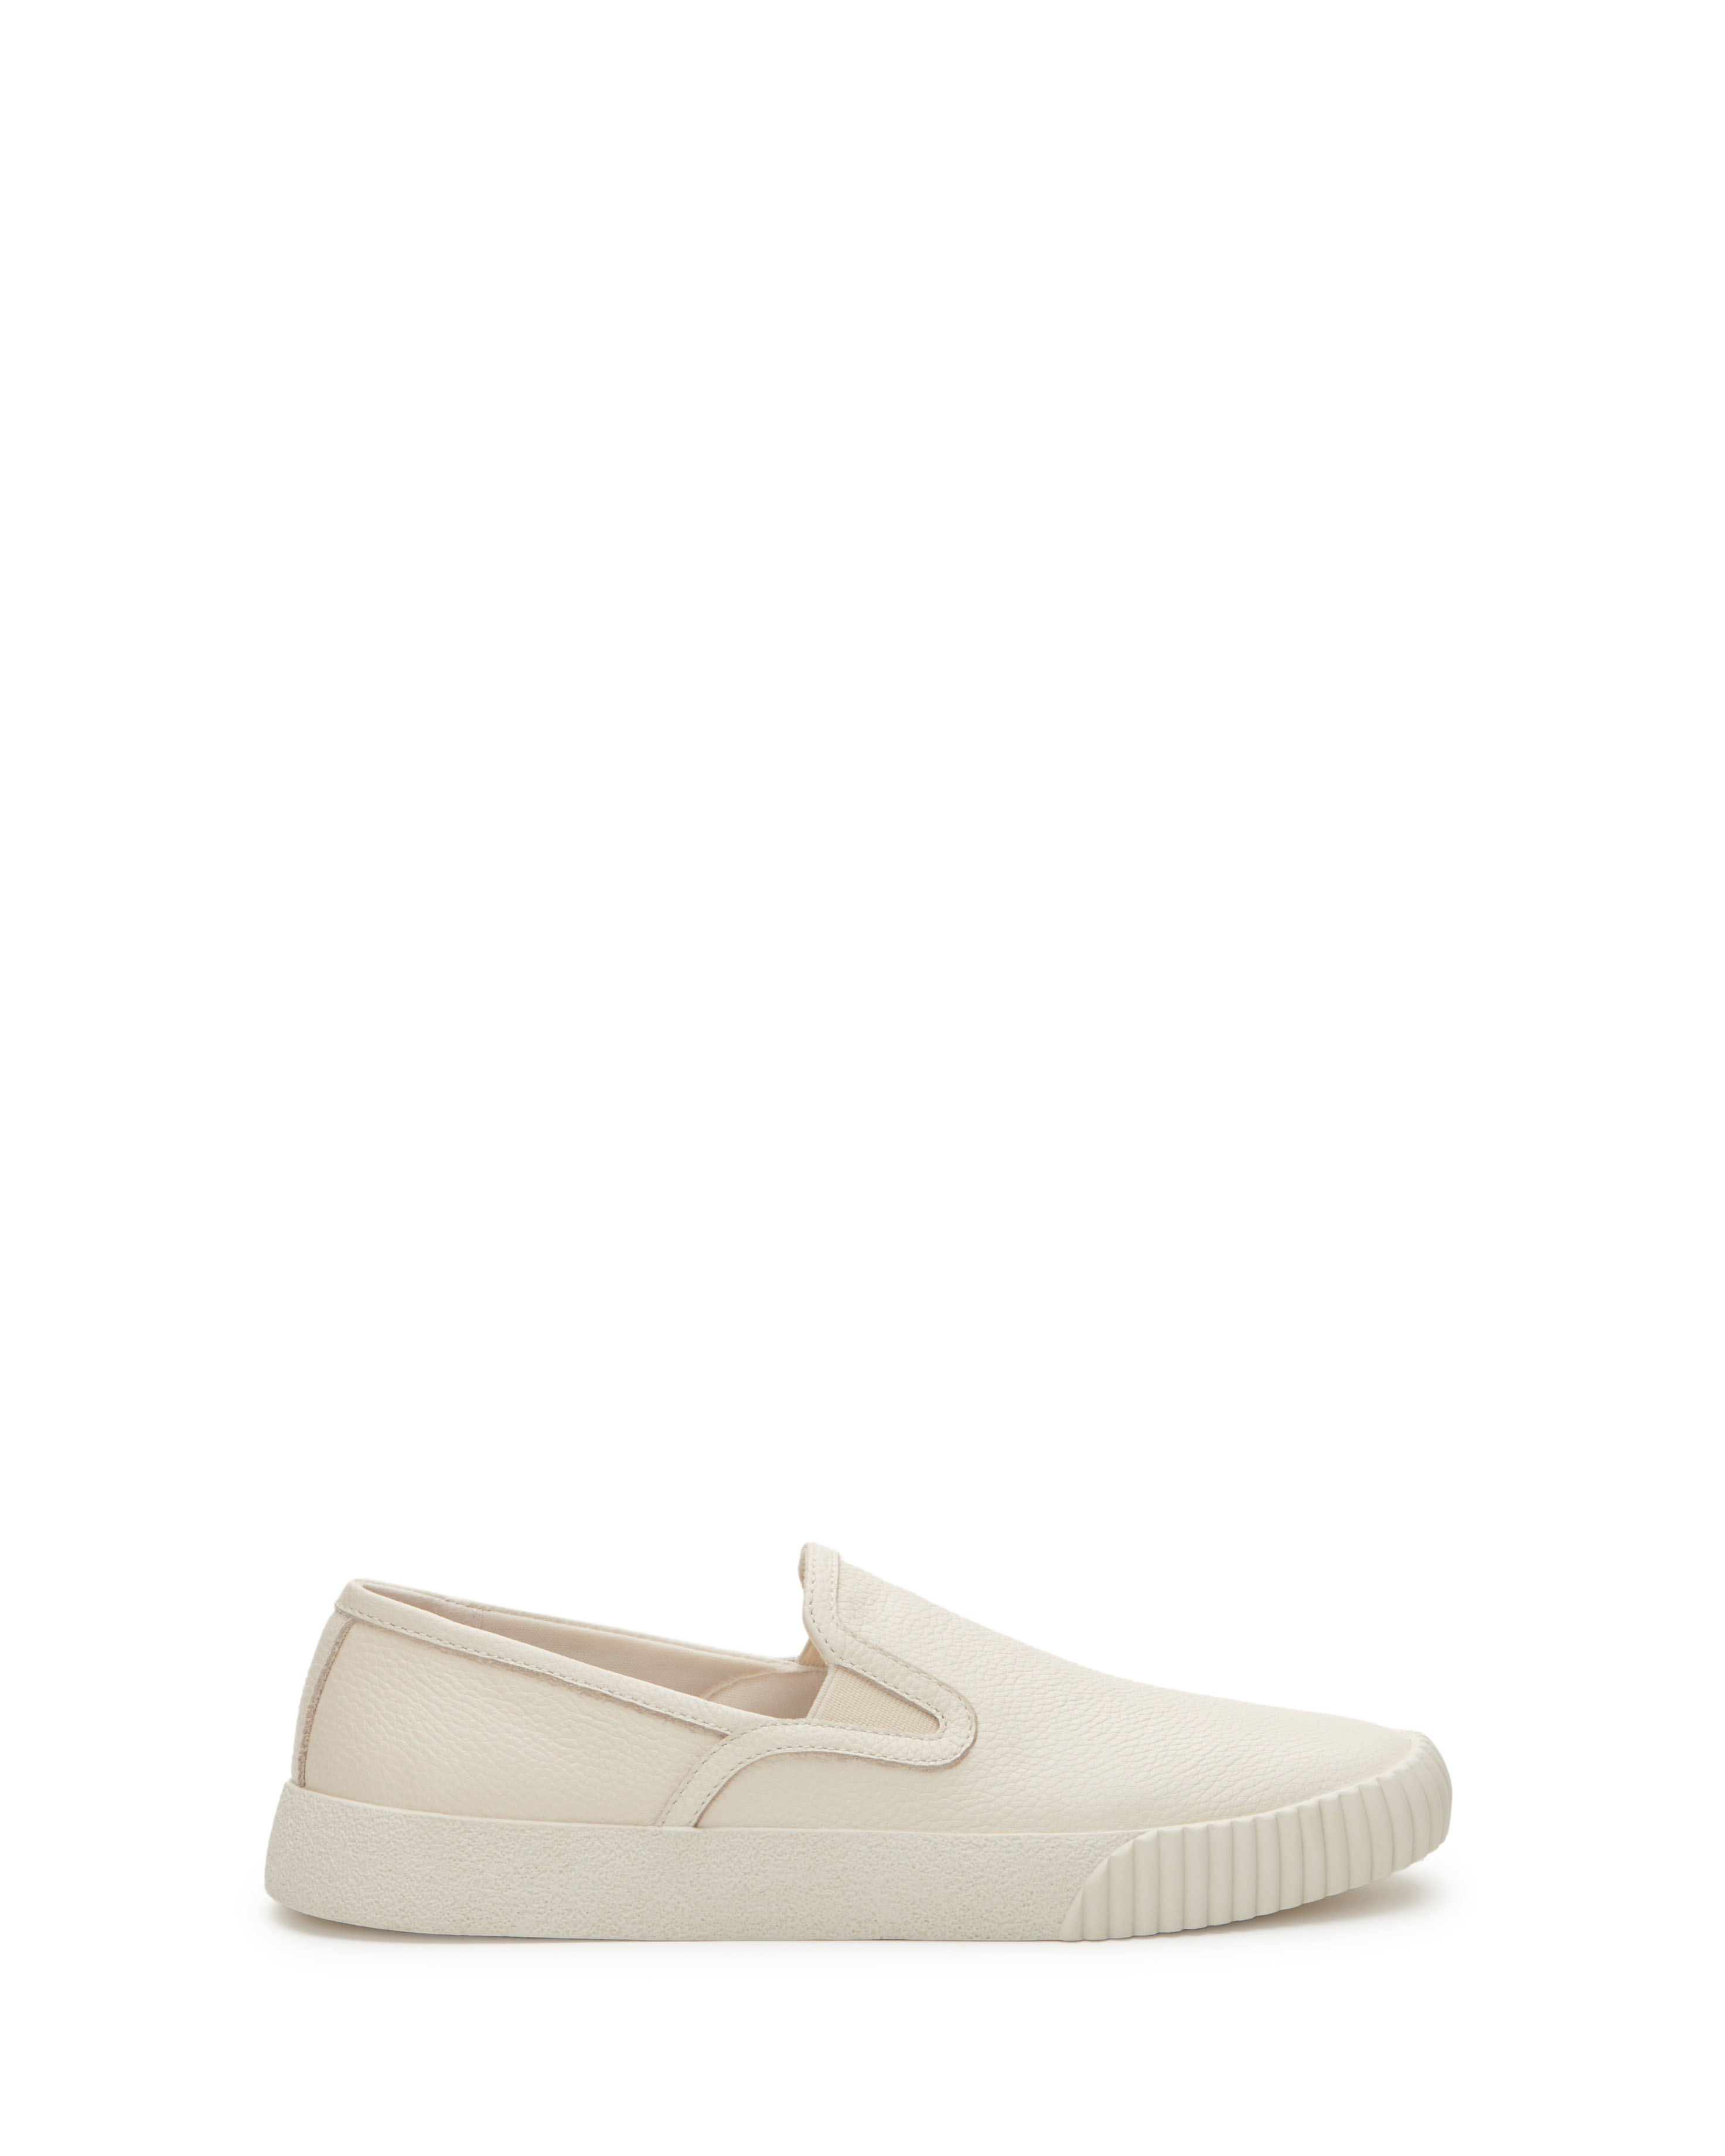 Women's Vince Camuto Aljetti Slip On Sneakers Shoes Size 8.5 Creamy White